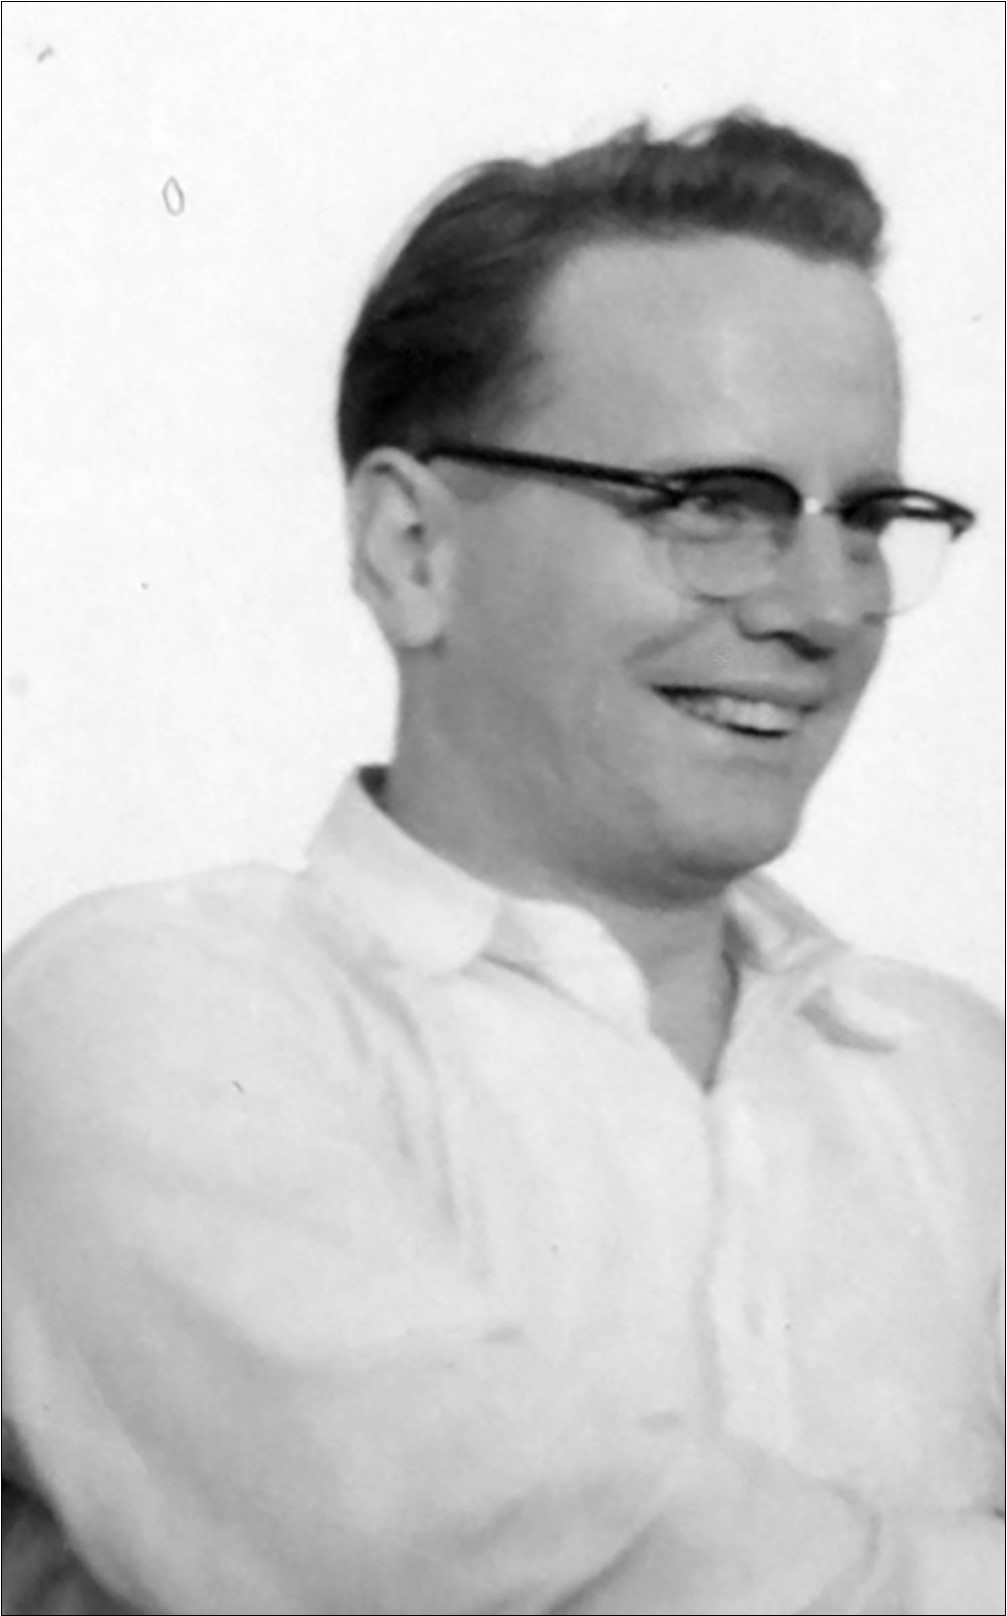 Black and white photograph of a man, Bob Walsh